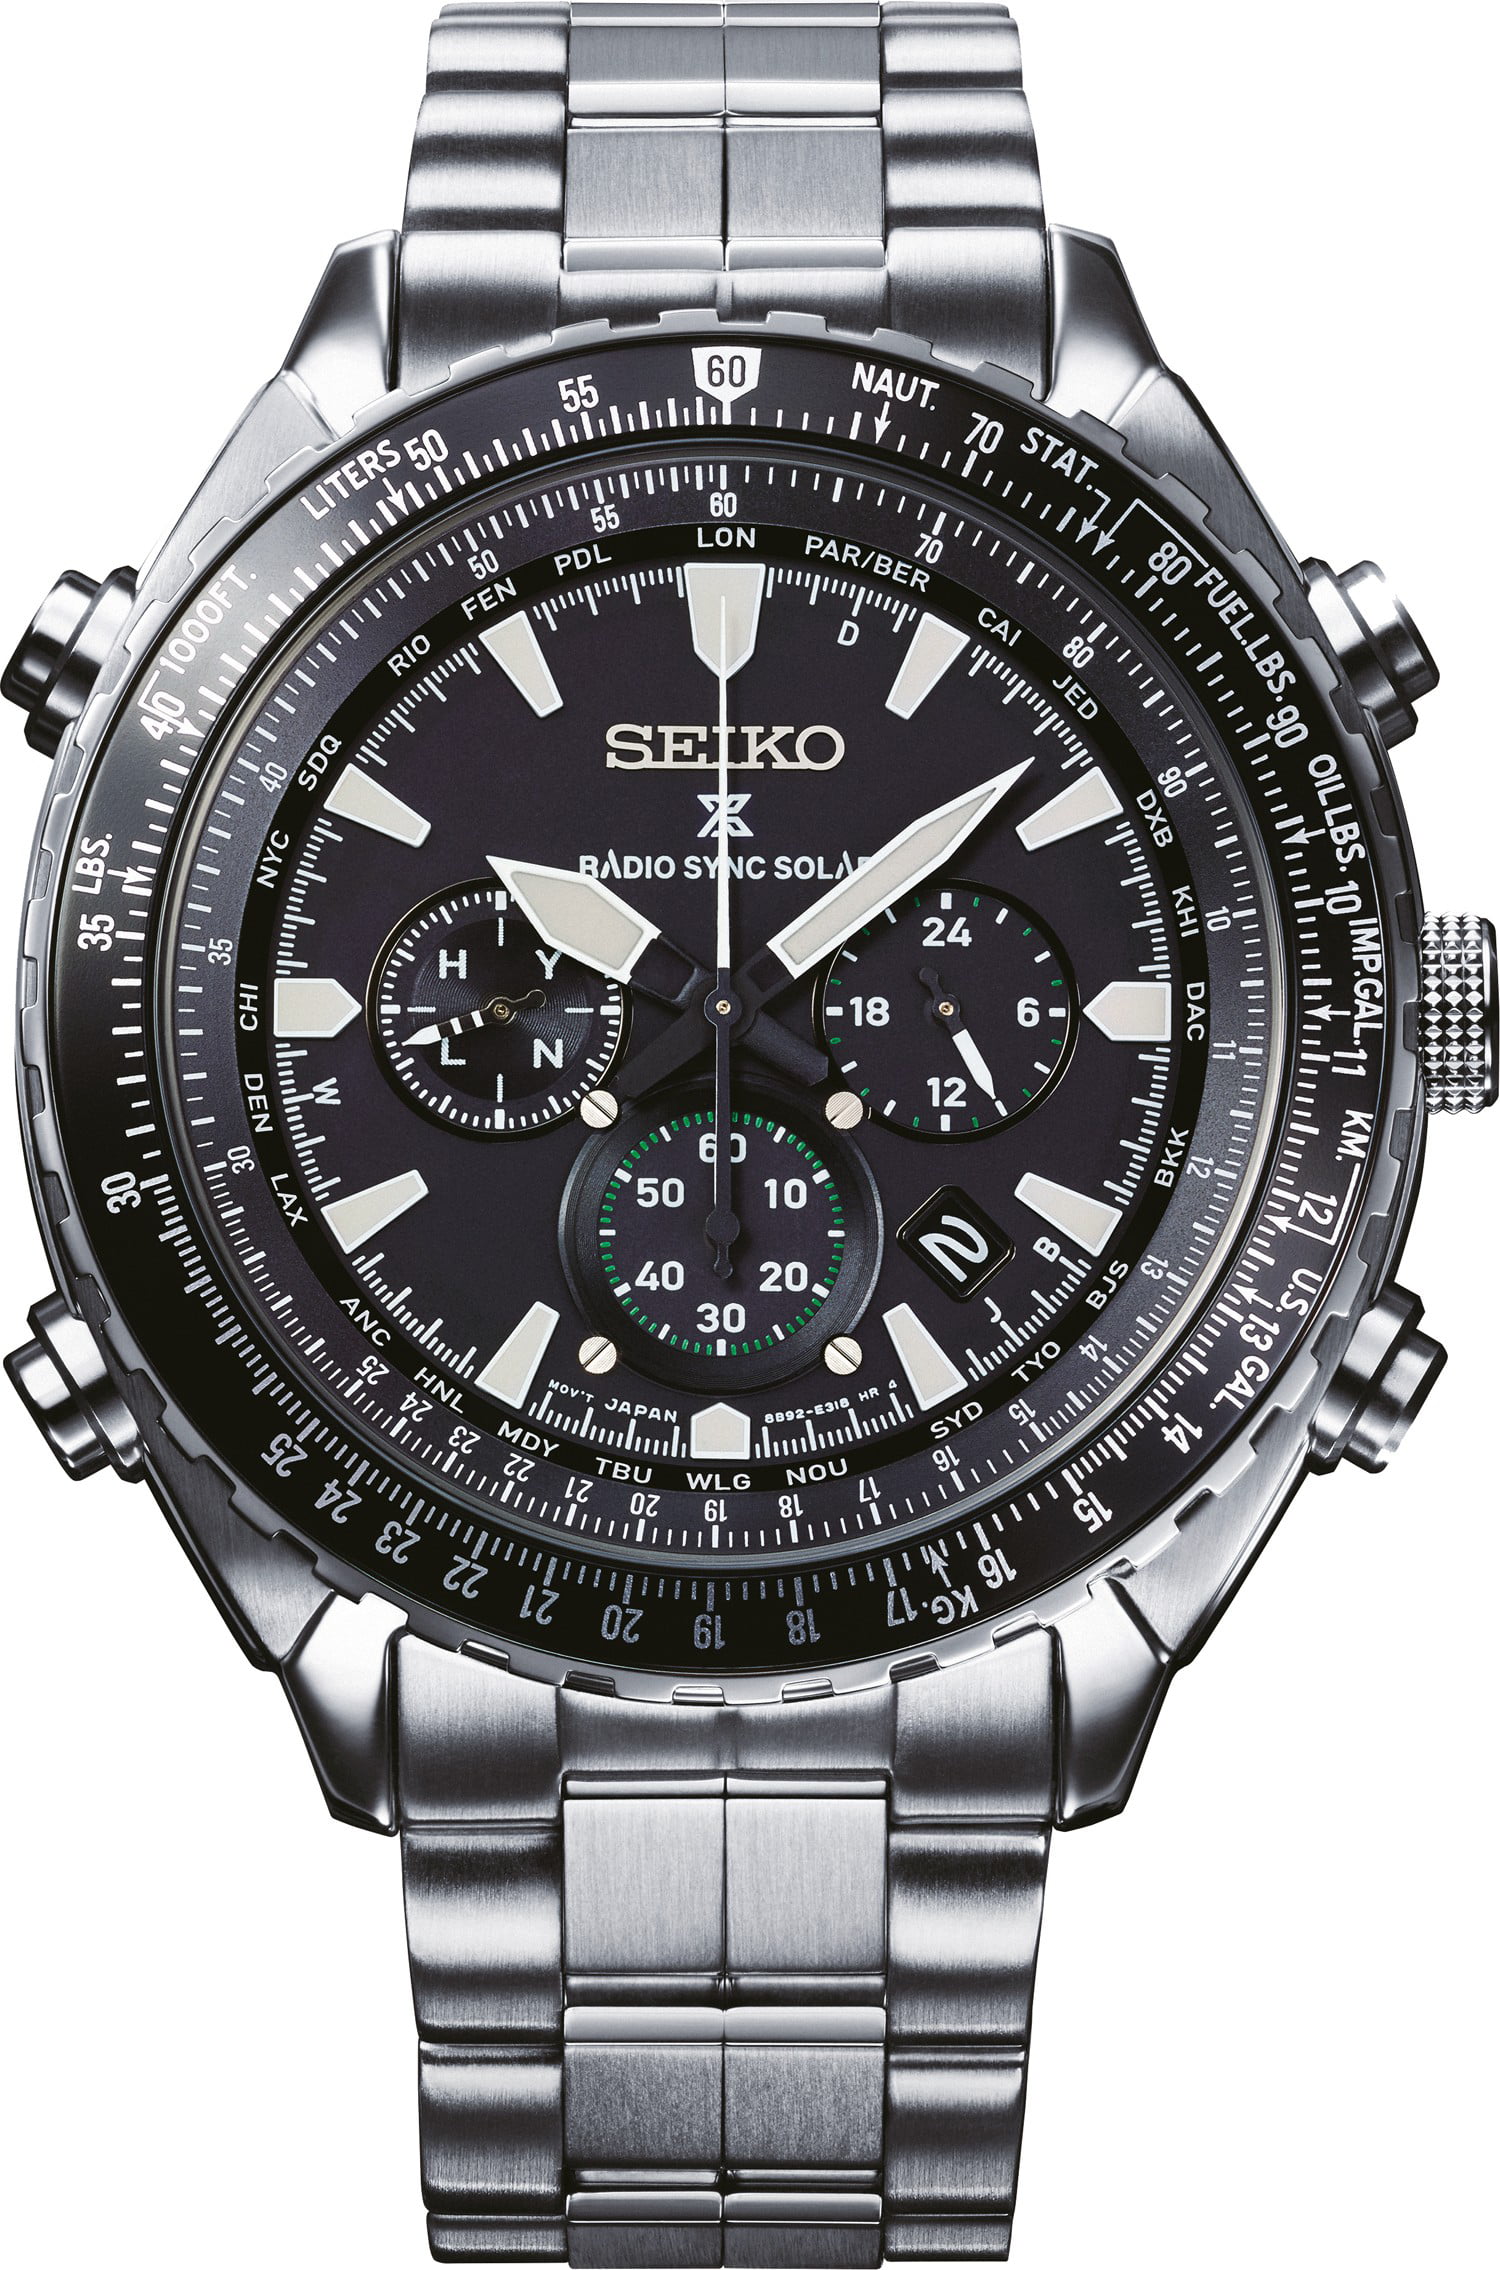 Seiko Men's Prospex Radio Sync Solar Pilot Watch SSG001P1 - Walmart.com